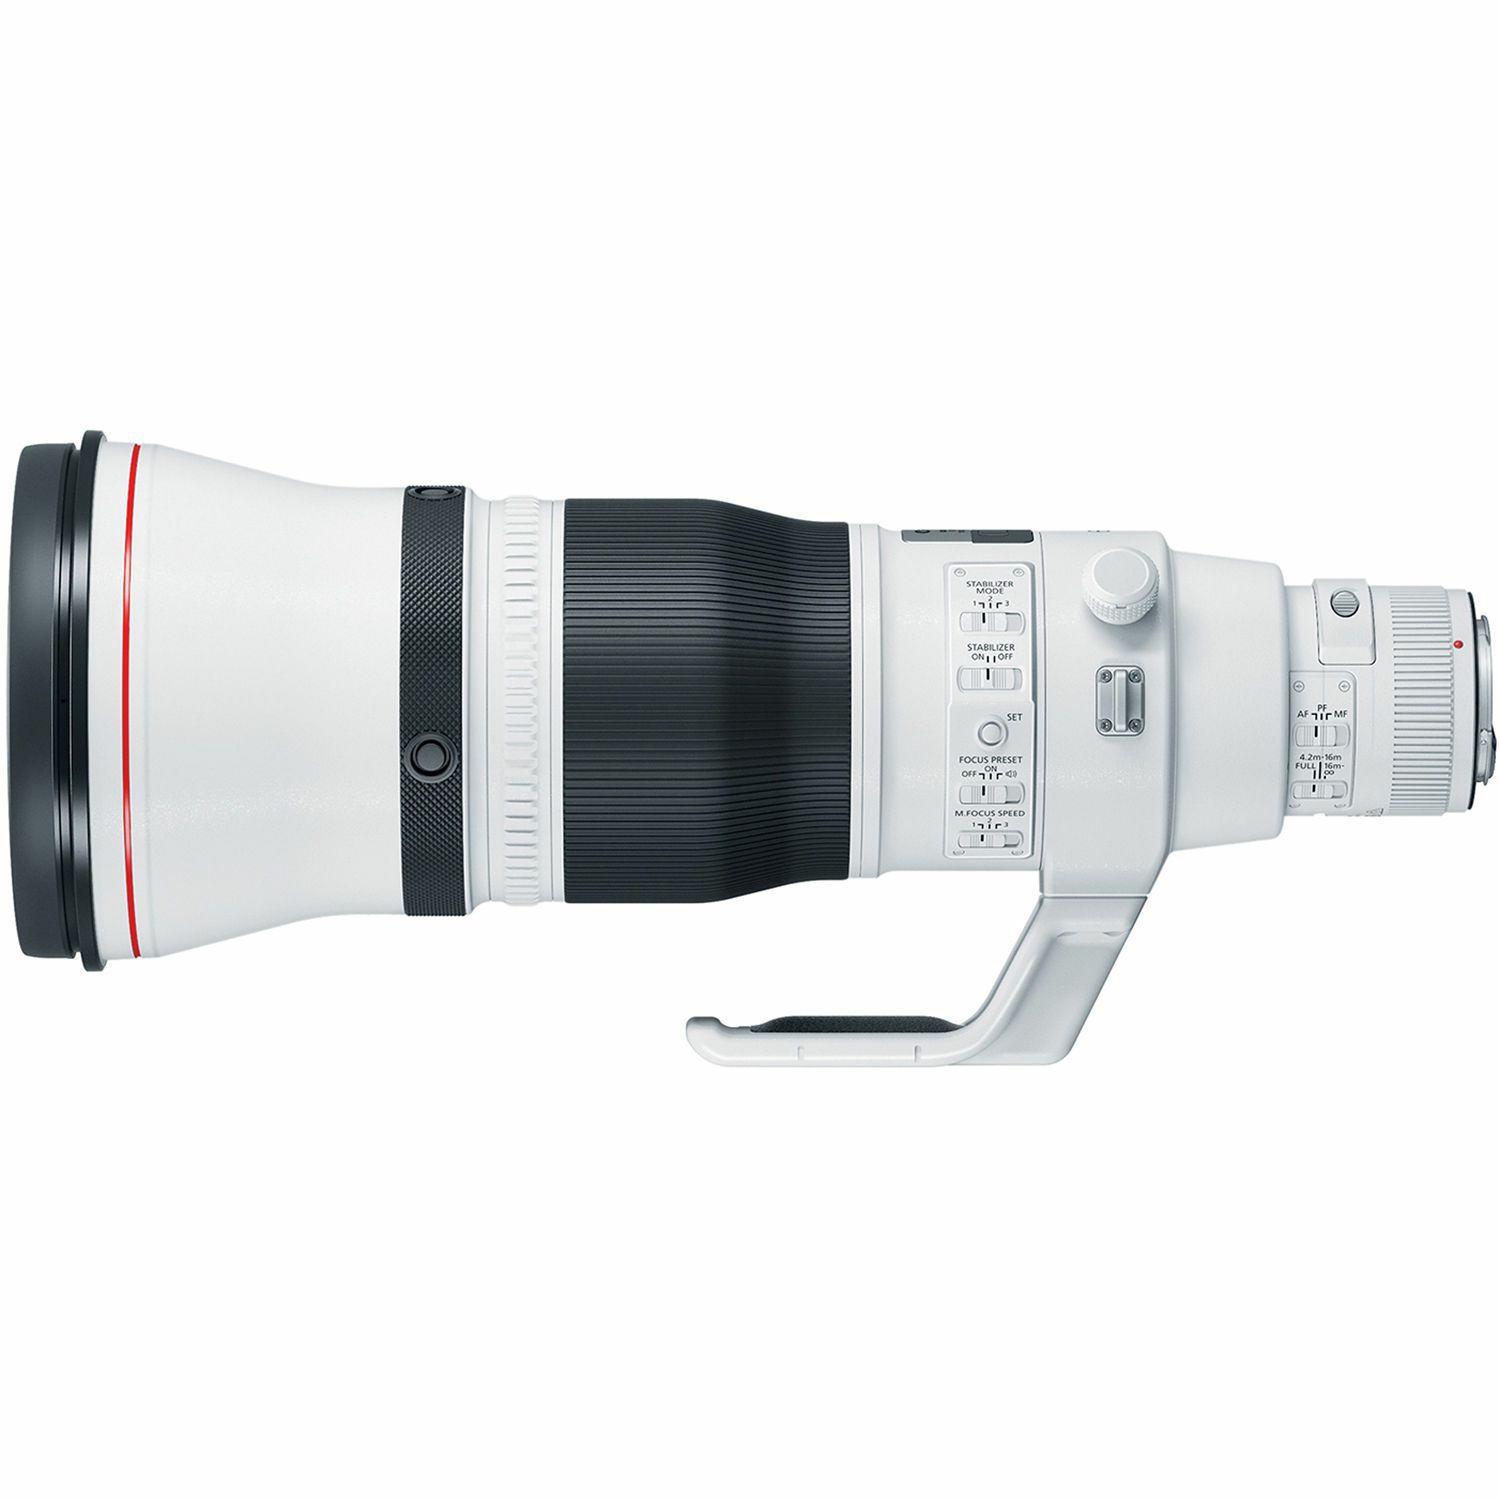 Canon EF 600mm f/4 L IS III USM telefoto objektiv fiksne žarišne duljine 600 F4 F4.0 4.0 1:4,0 prime lens (3329C005AA)